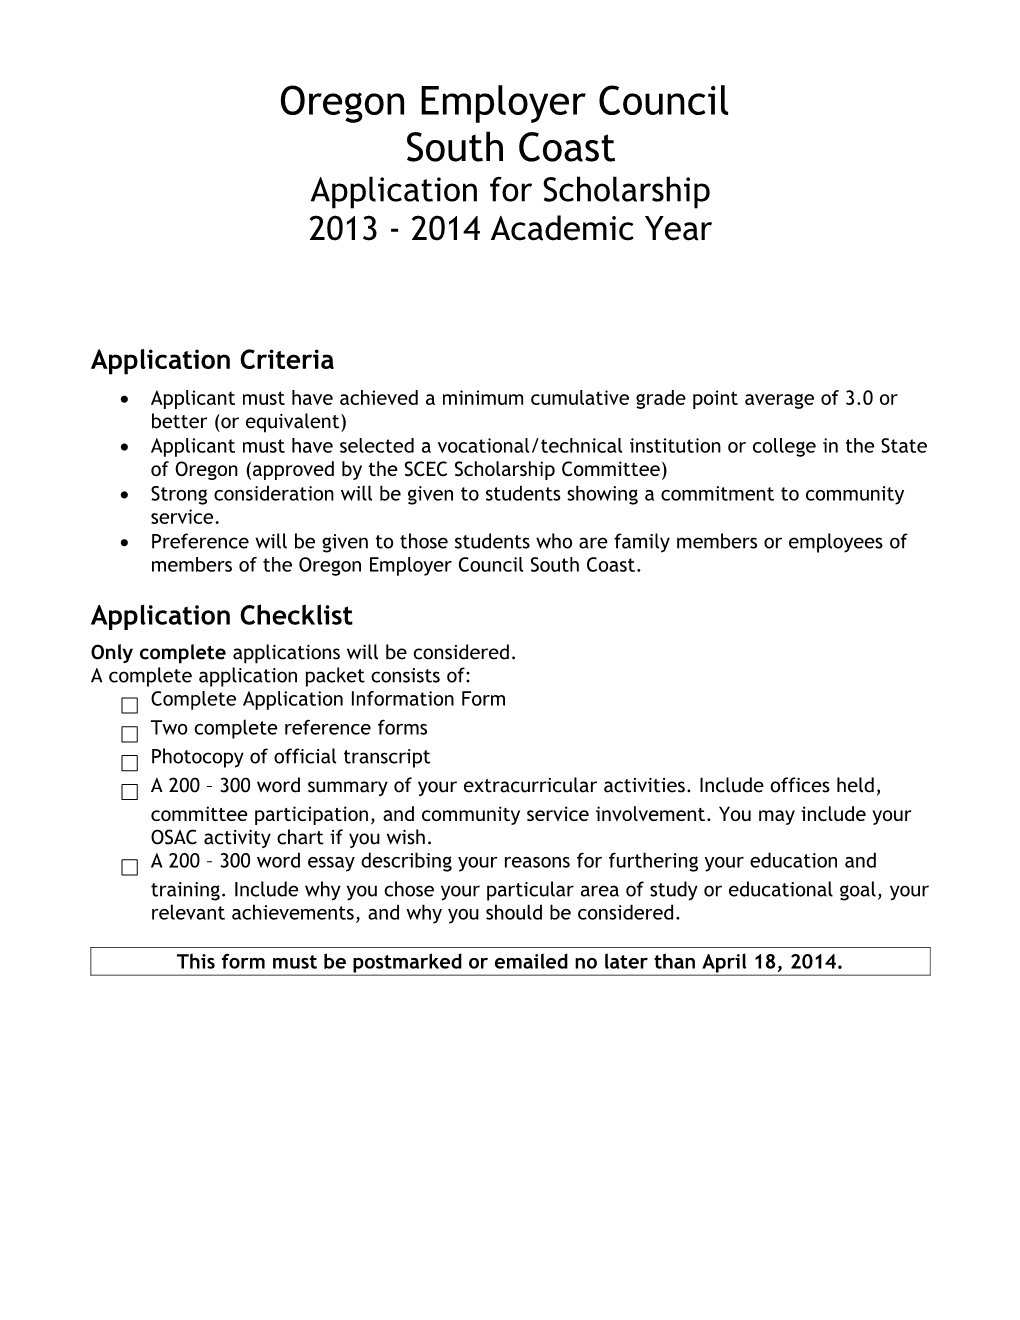 Oregon Employer Council South Coast 2013-14 Scholarship Application